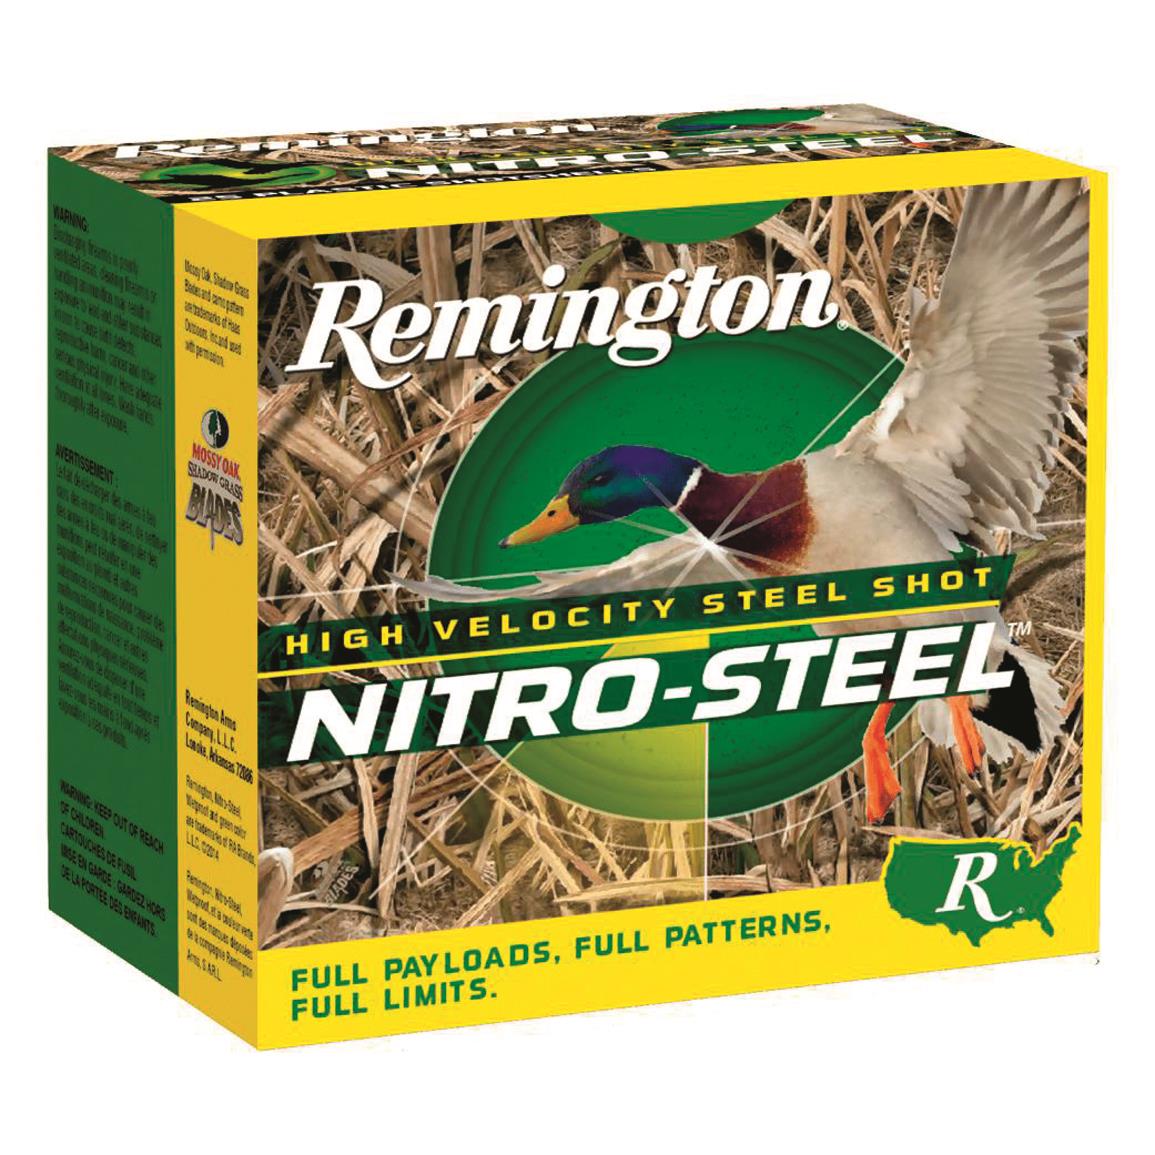 Remington Nitro-Steel High-Velocity, 10 Gauge, 3 1/2" Shot Shells, 1 1/2 oz., 250 Rounds